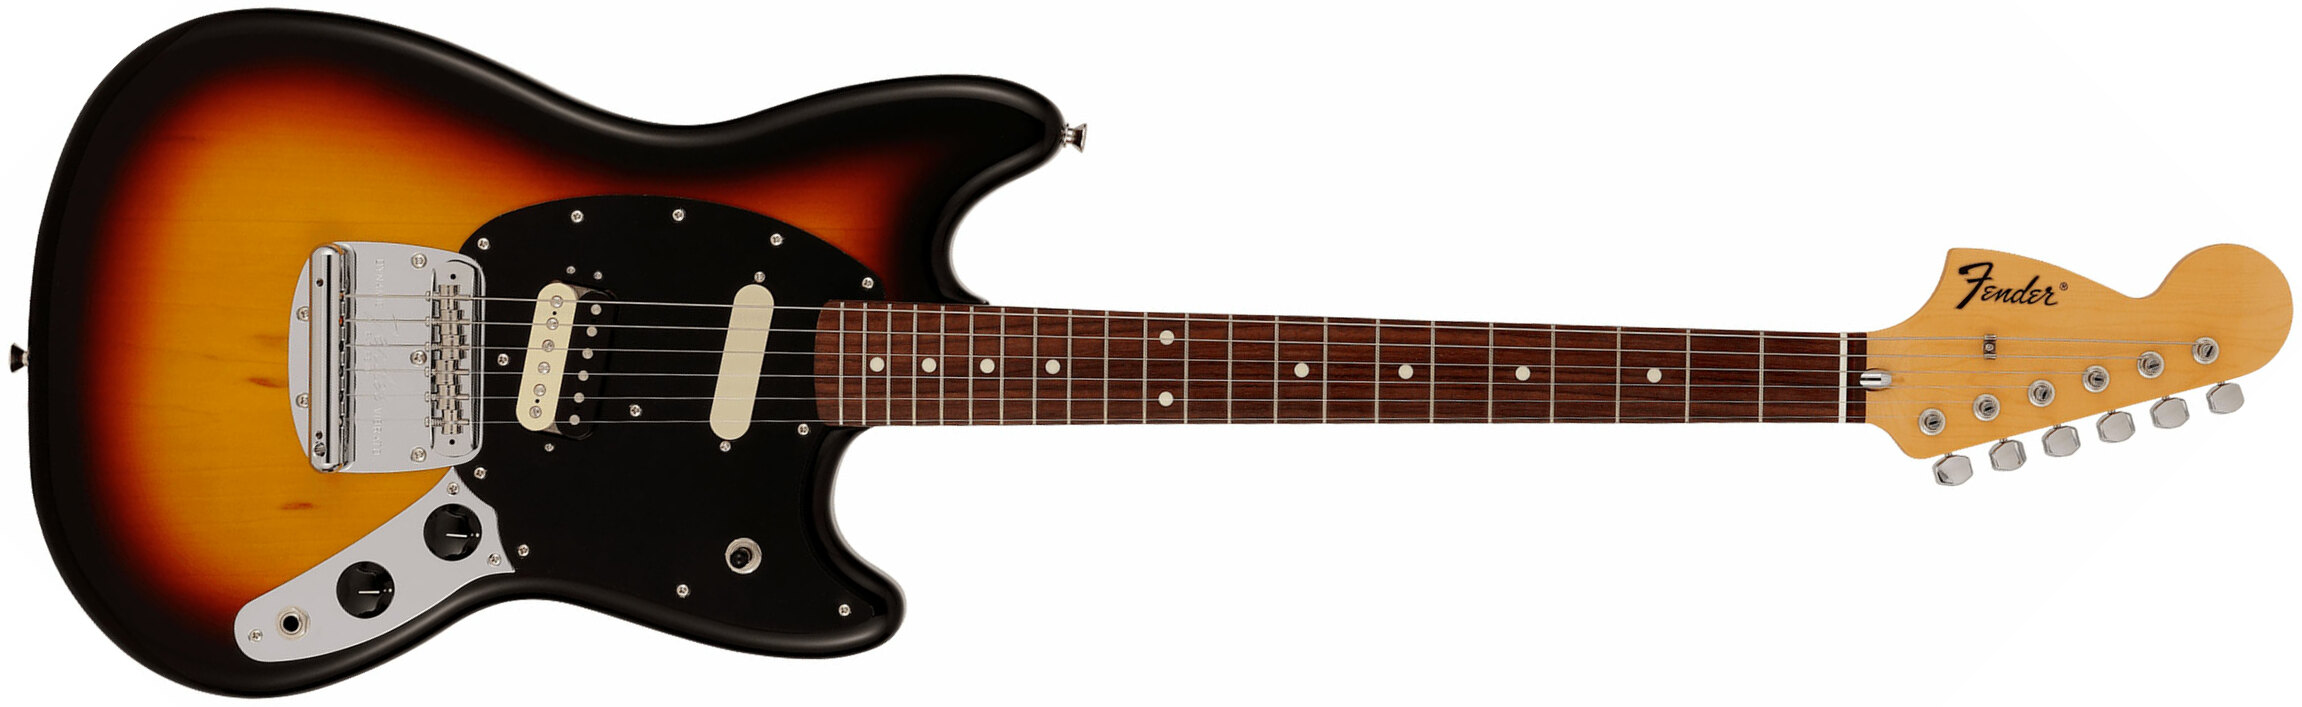 Fender Mustang Reverse Headstock Traditional Ltd Jap Hs Trem Rw - 3-color Sunburst - Str shape electric guitar - Main picture